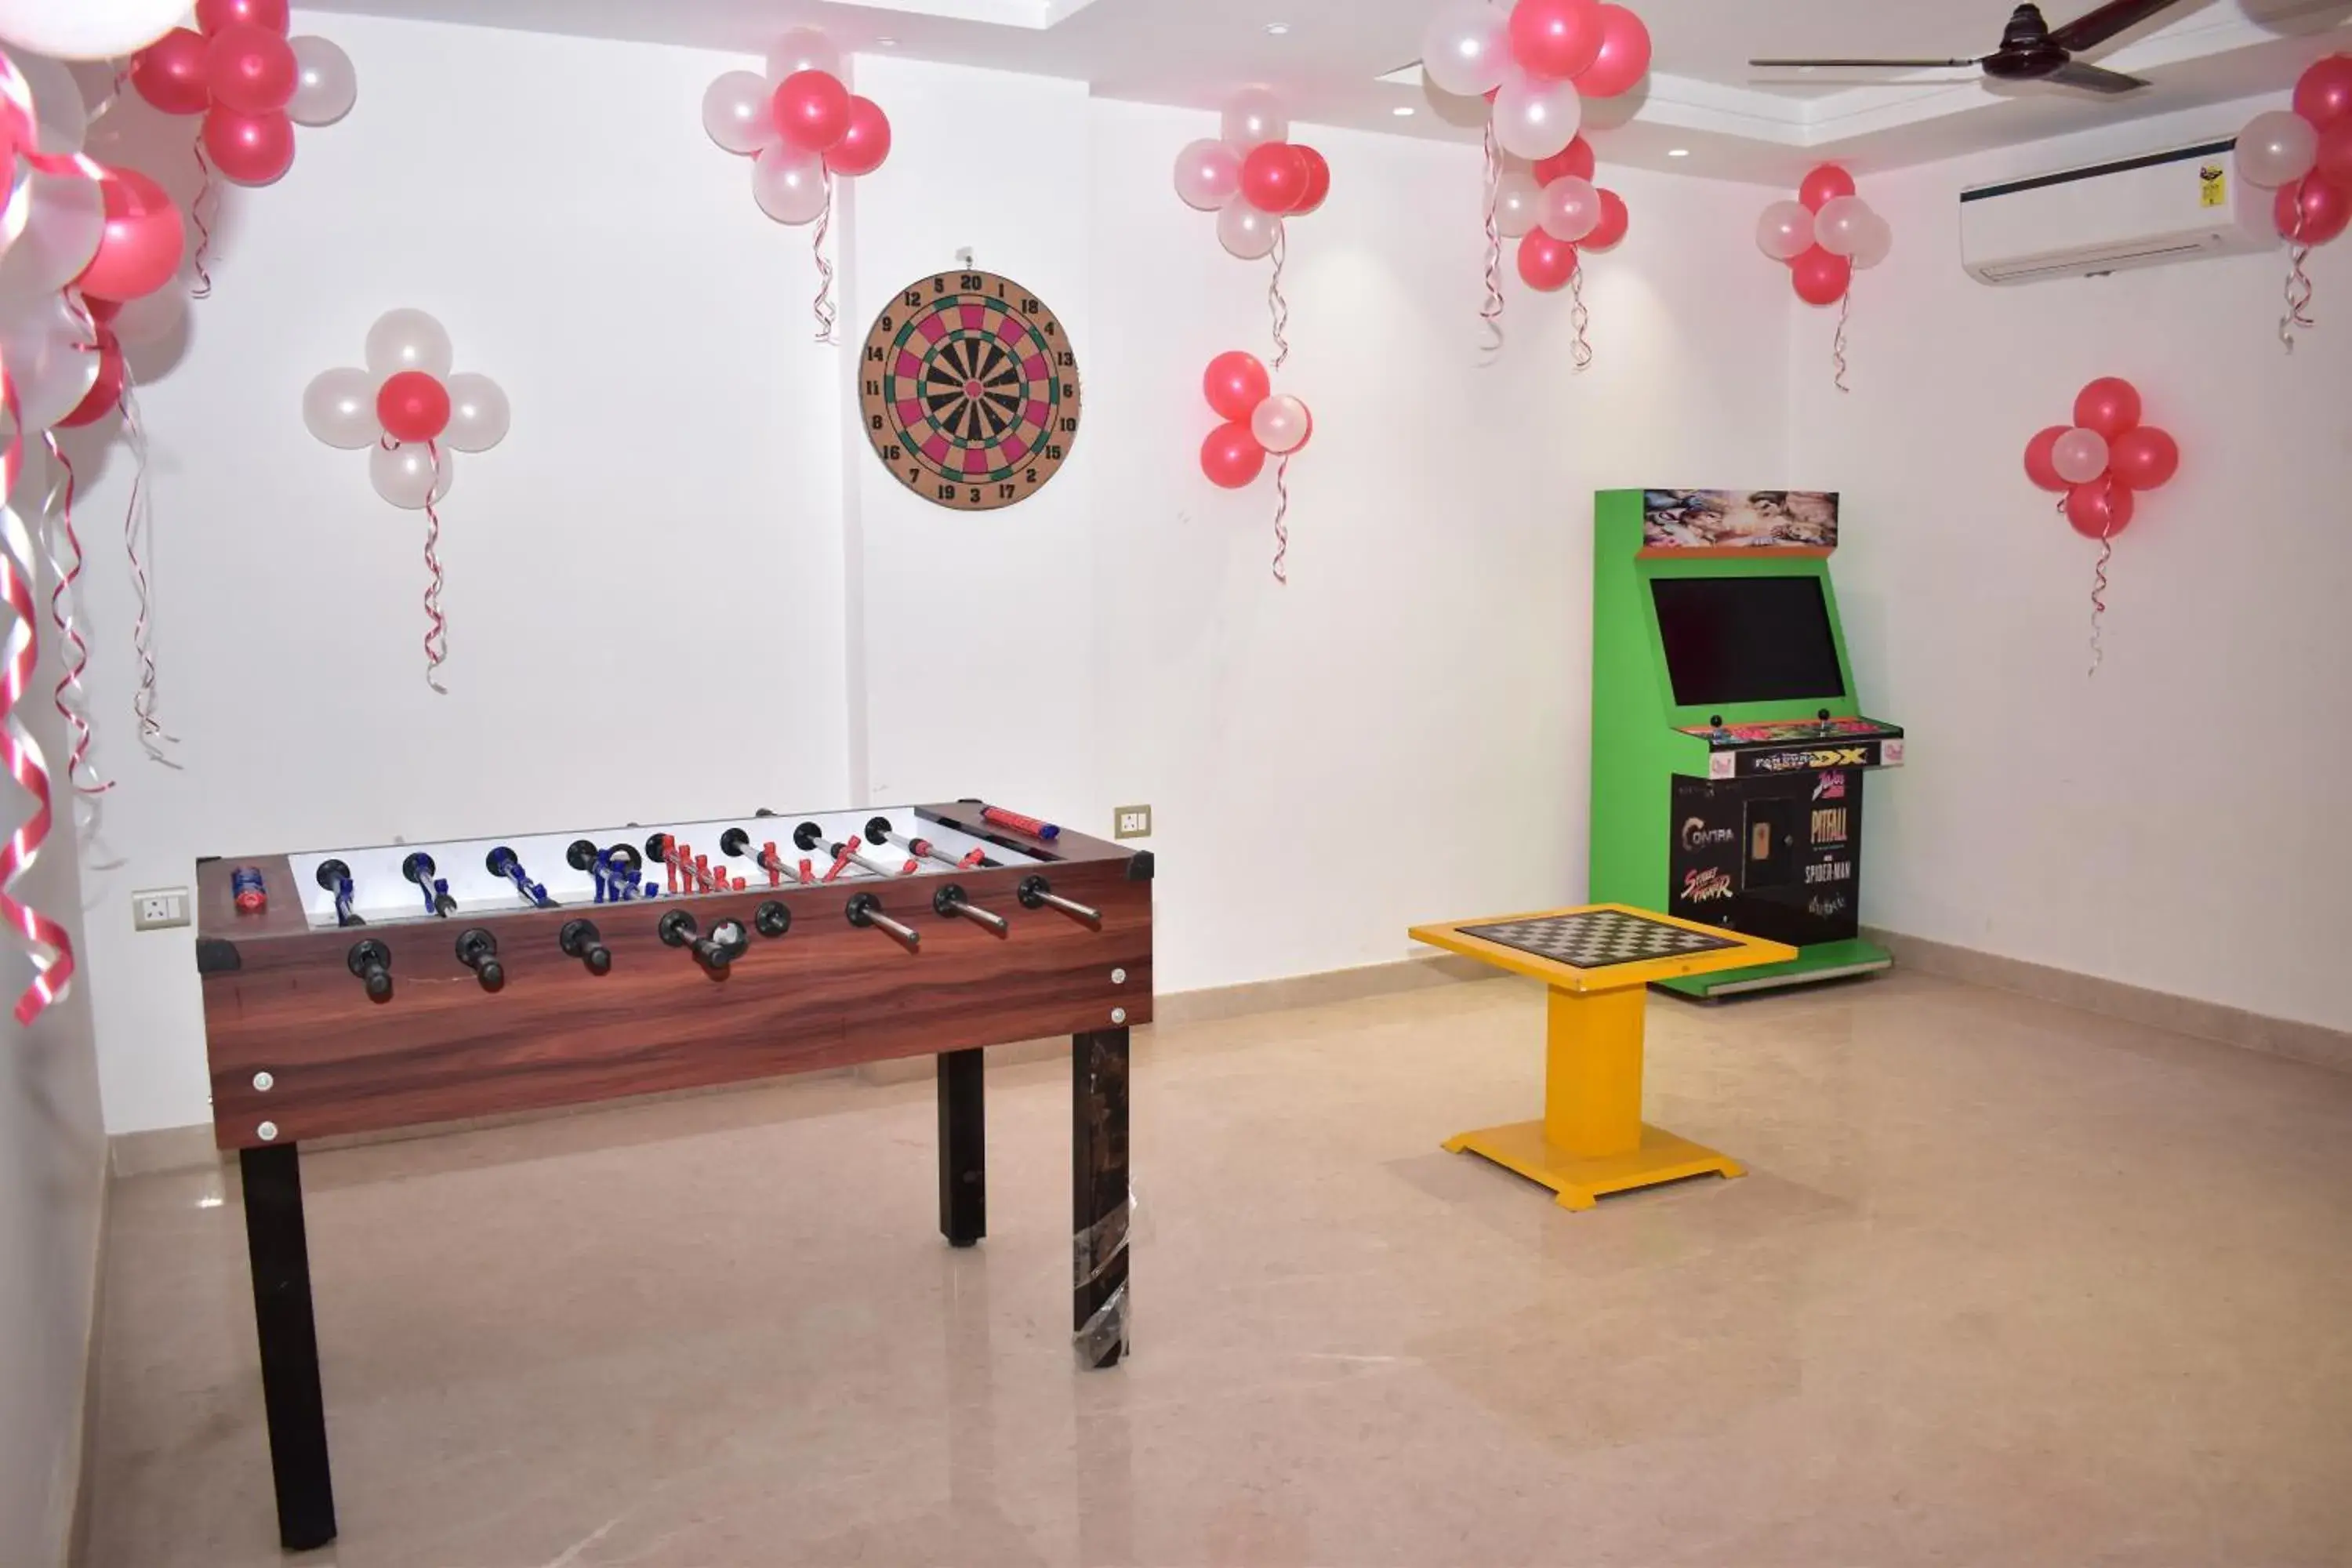 Game Room, Other Activities in Hotel Ashok Vihar